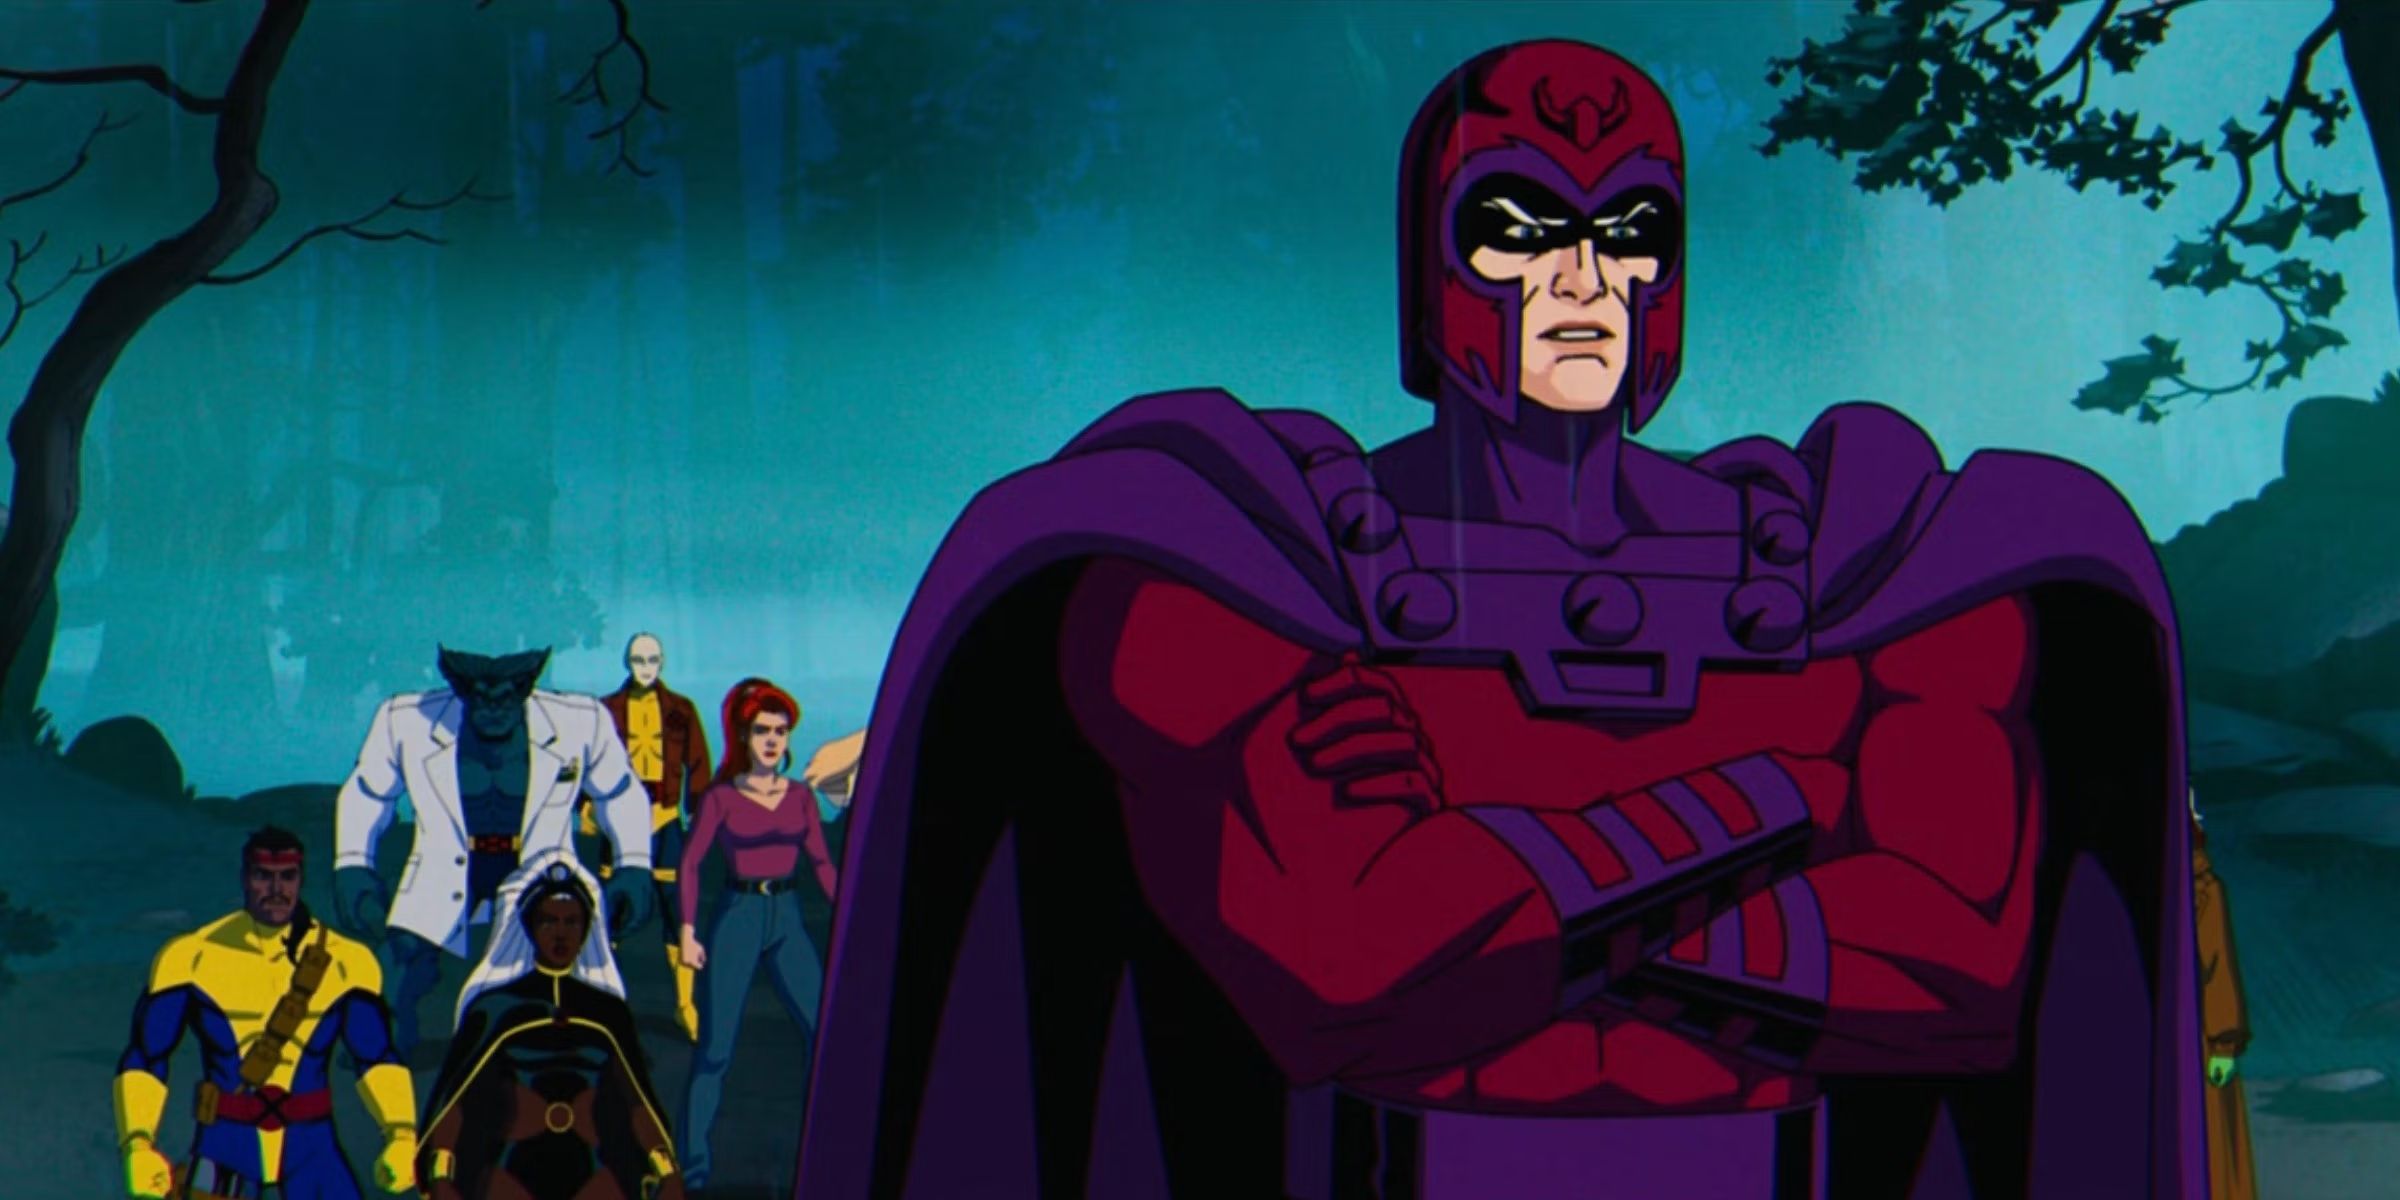 Magneto stands in front of the X-Men in Episode 9 of X-Men '97